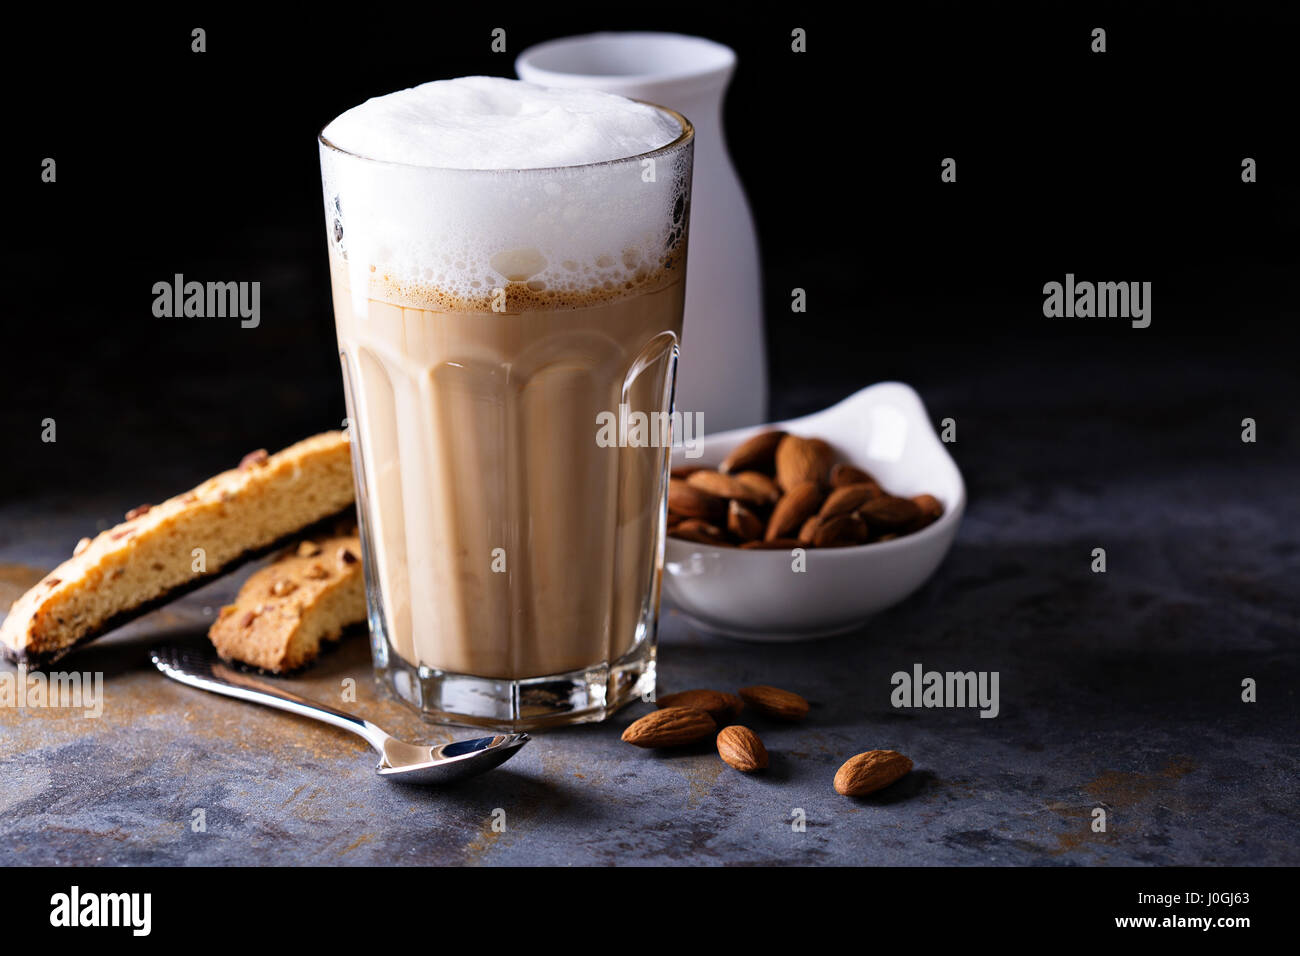 Coffee latte with almond milk Stock Photo